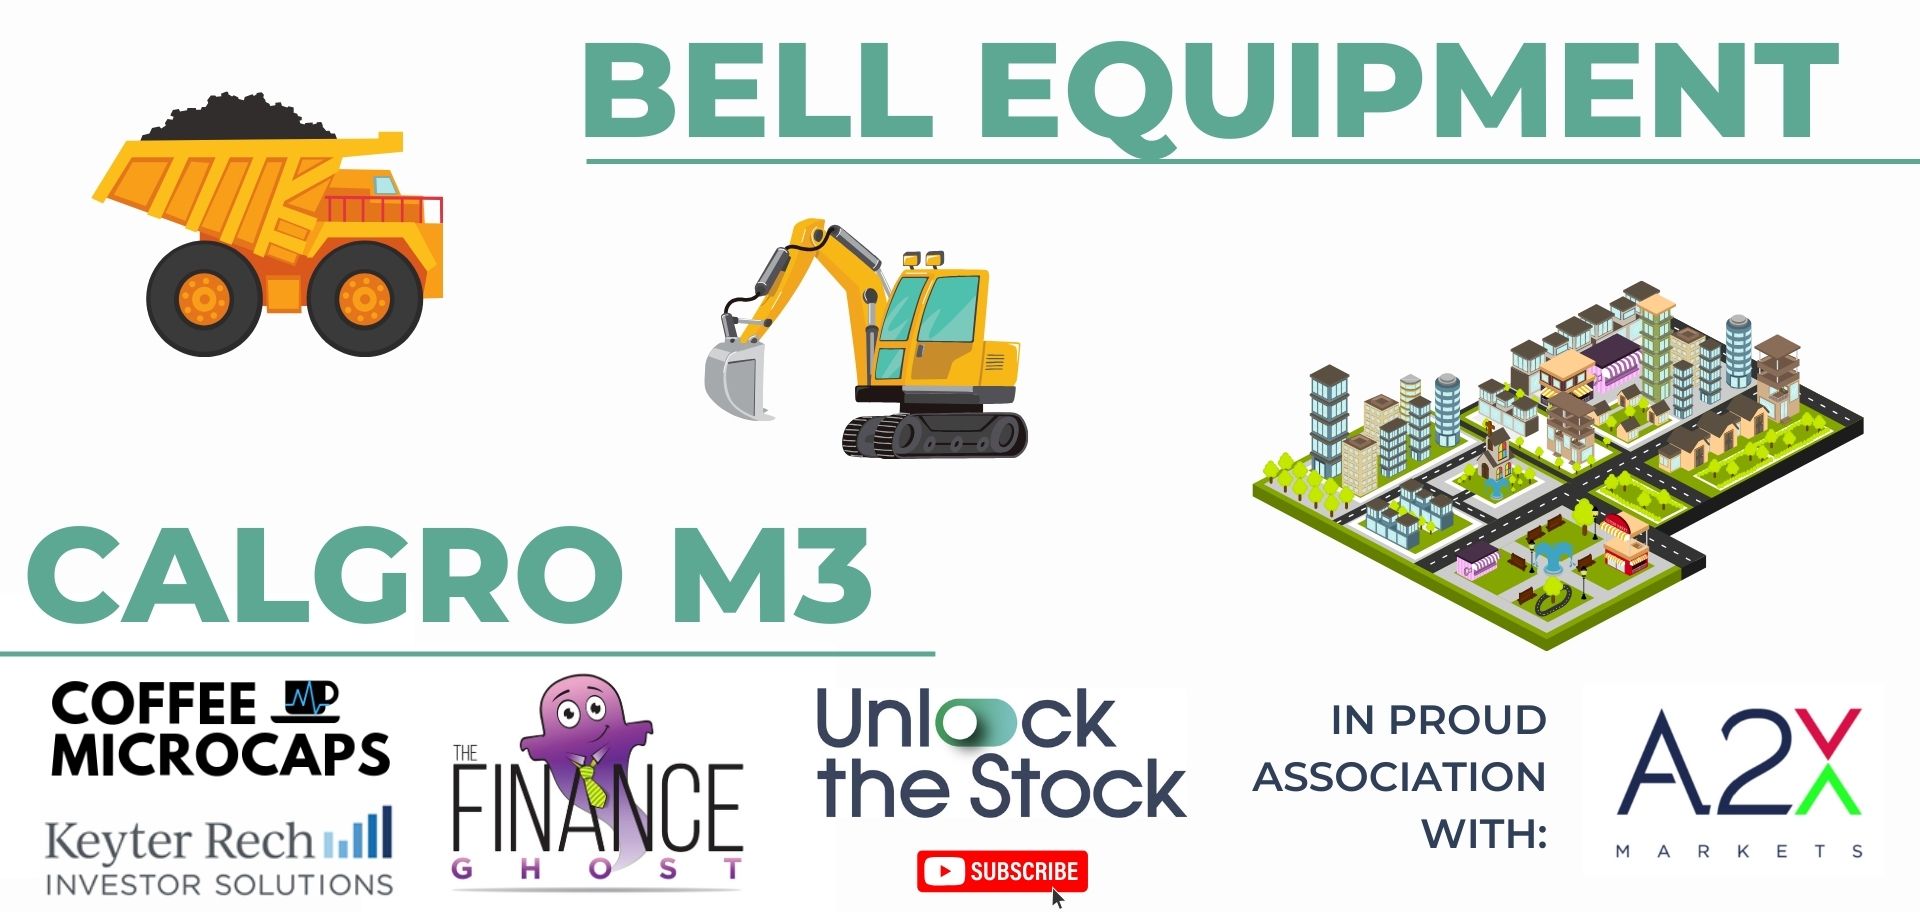 Unlock the Stock: Bell Equipment and Calgro M3